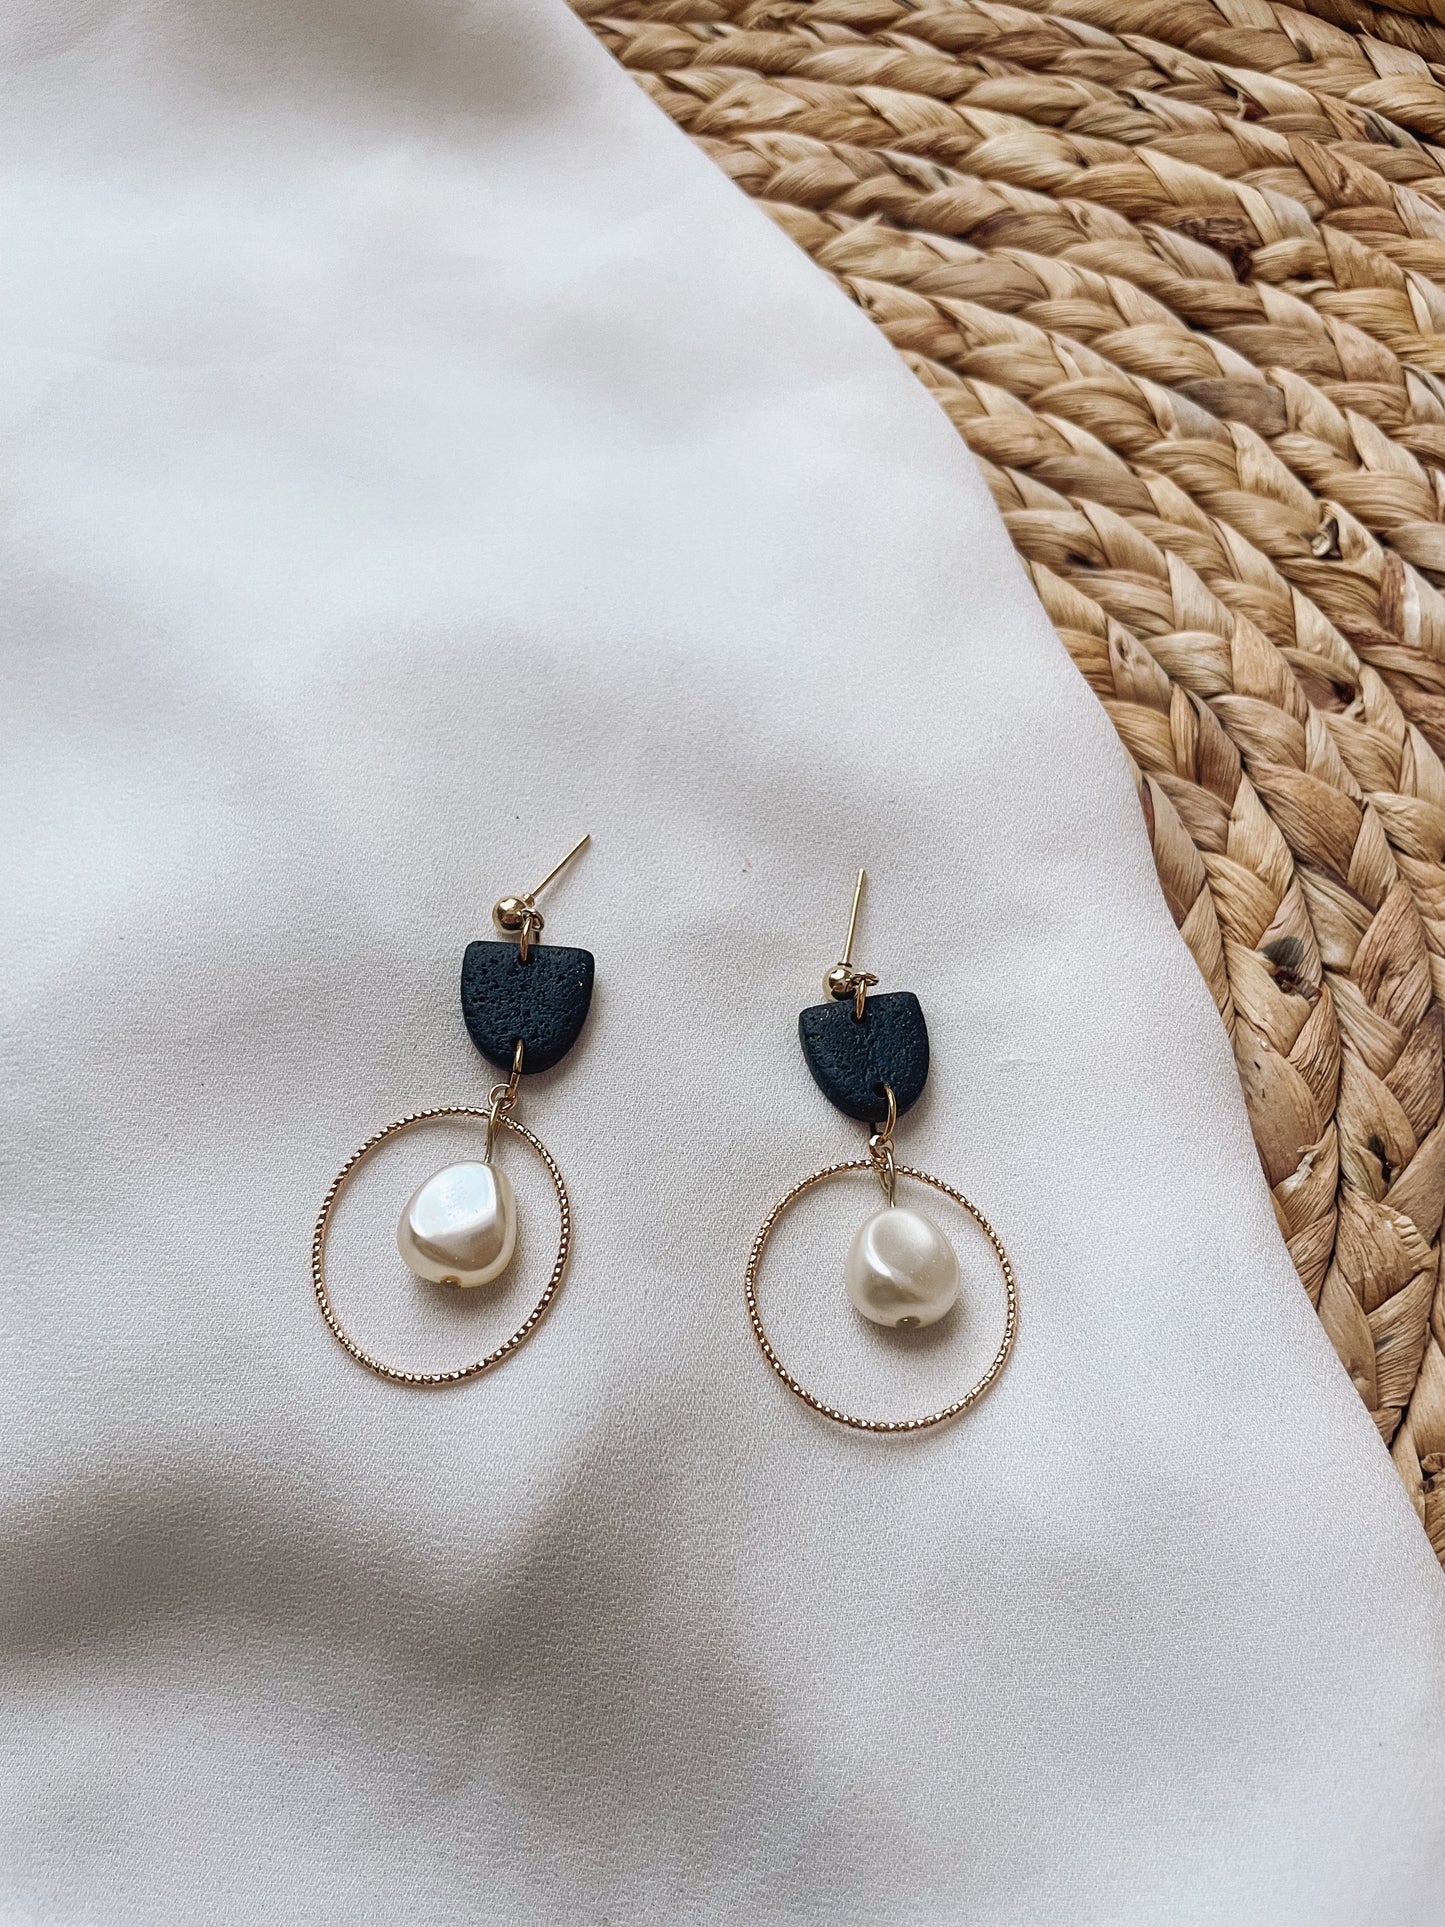 The "Bonnie" Earrings I Minimalist Neutral Earrings with Pearls